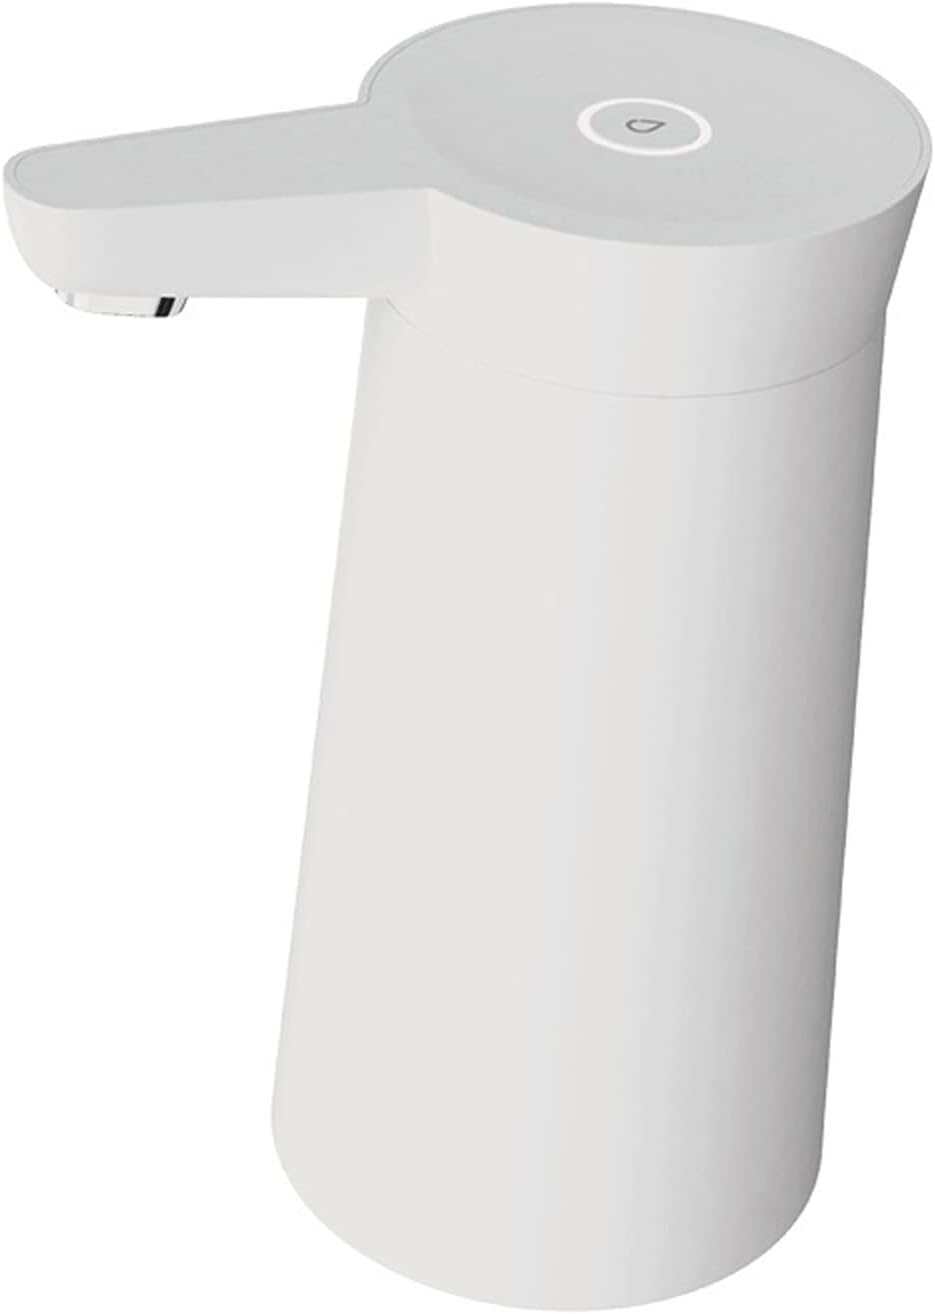 Water dispenser pump, rechargeable